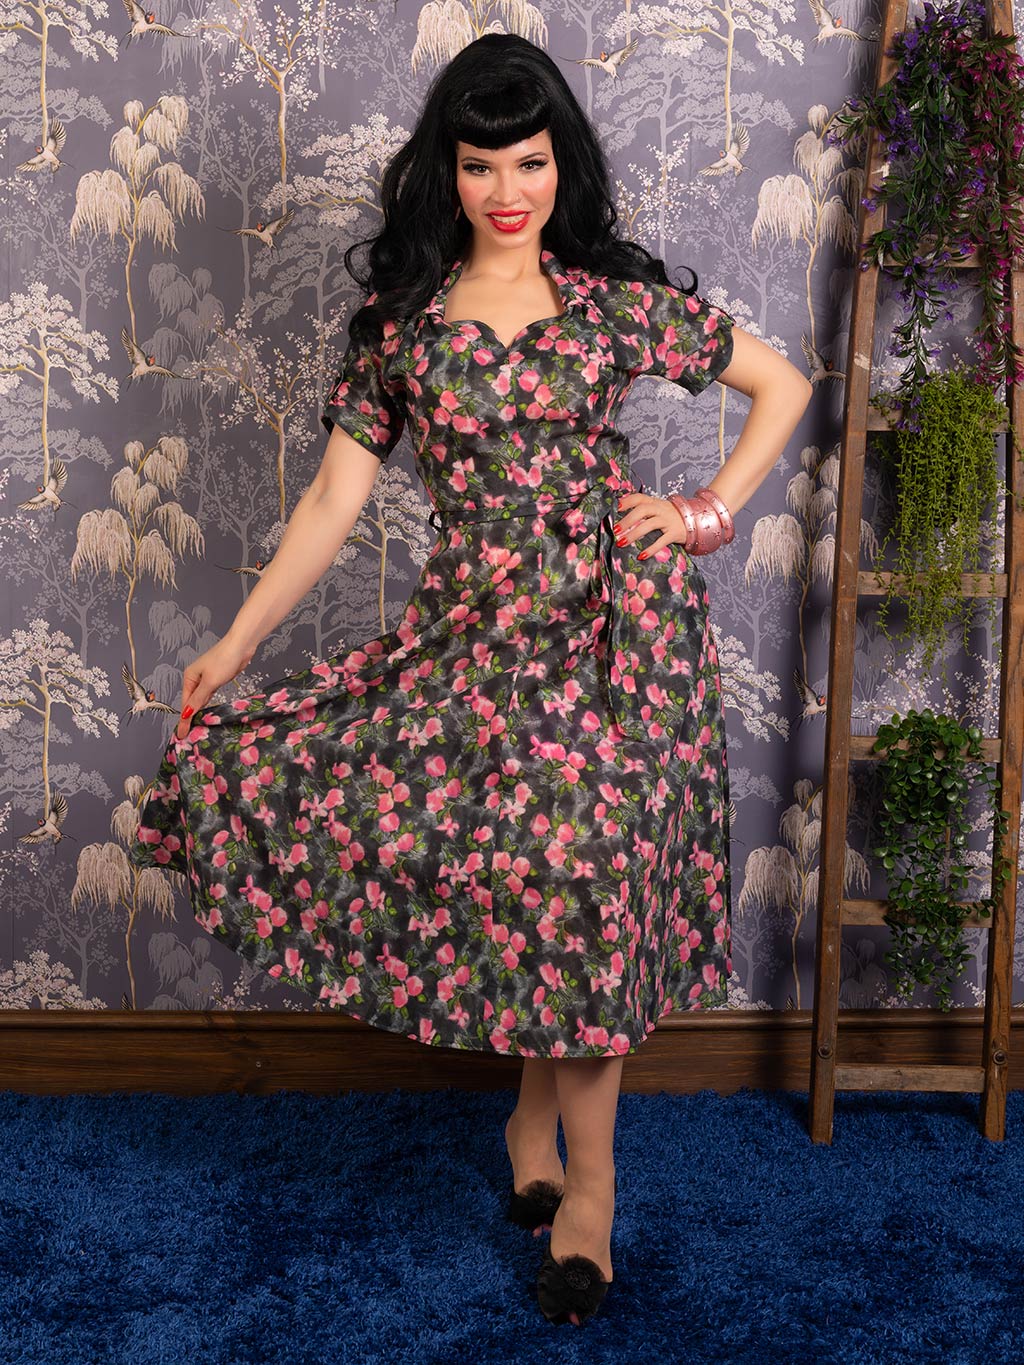 floral printed dress